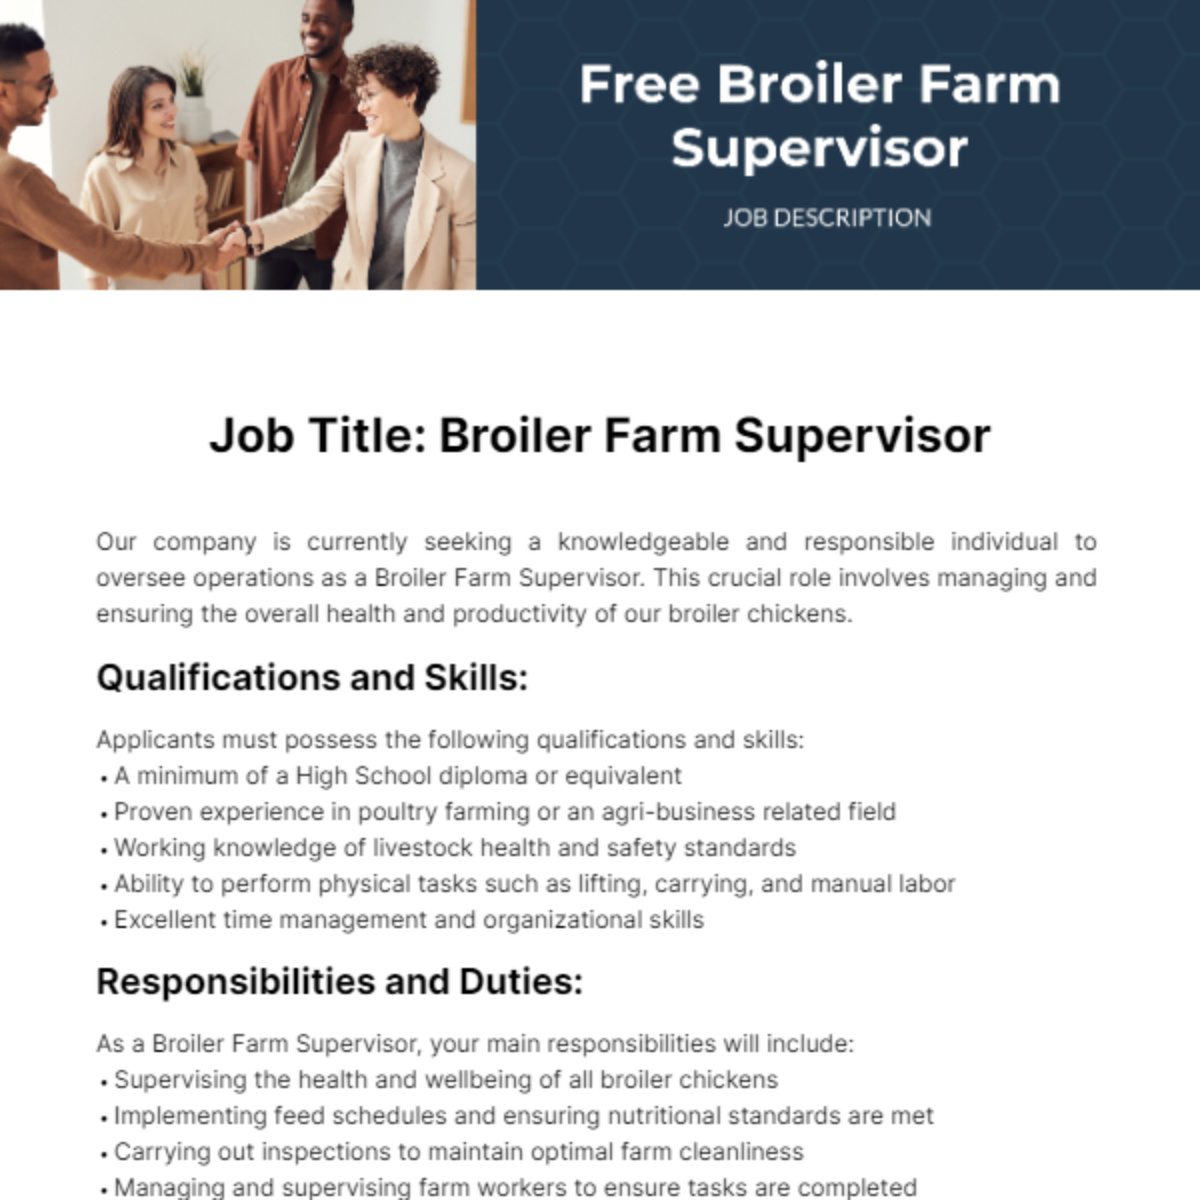 Free Broiler Farm Supervisor Job Description Template